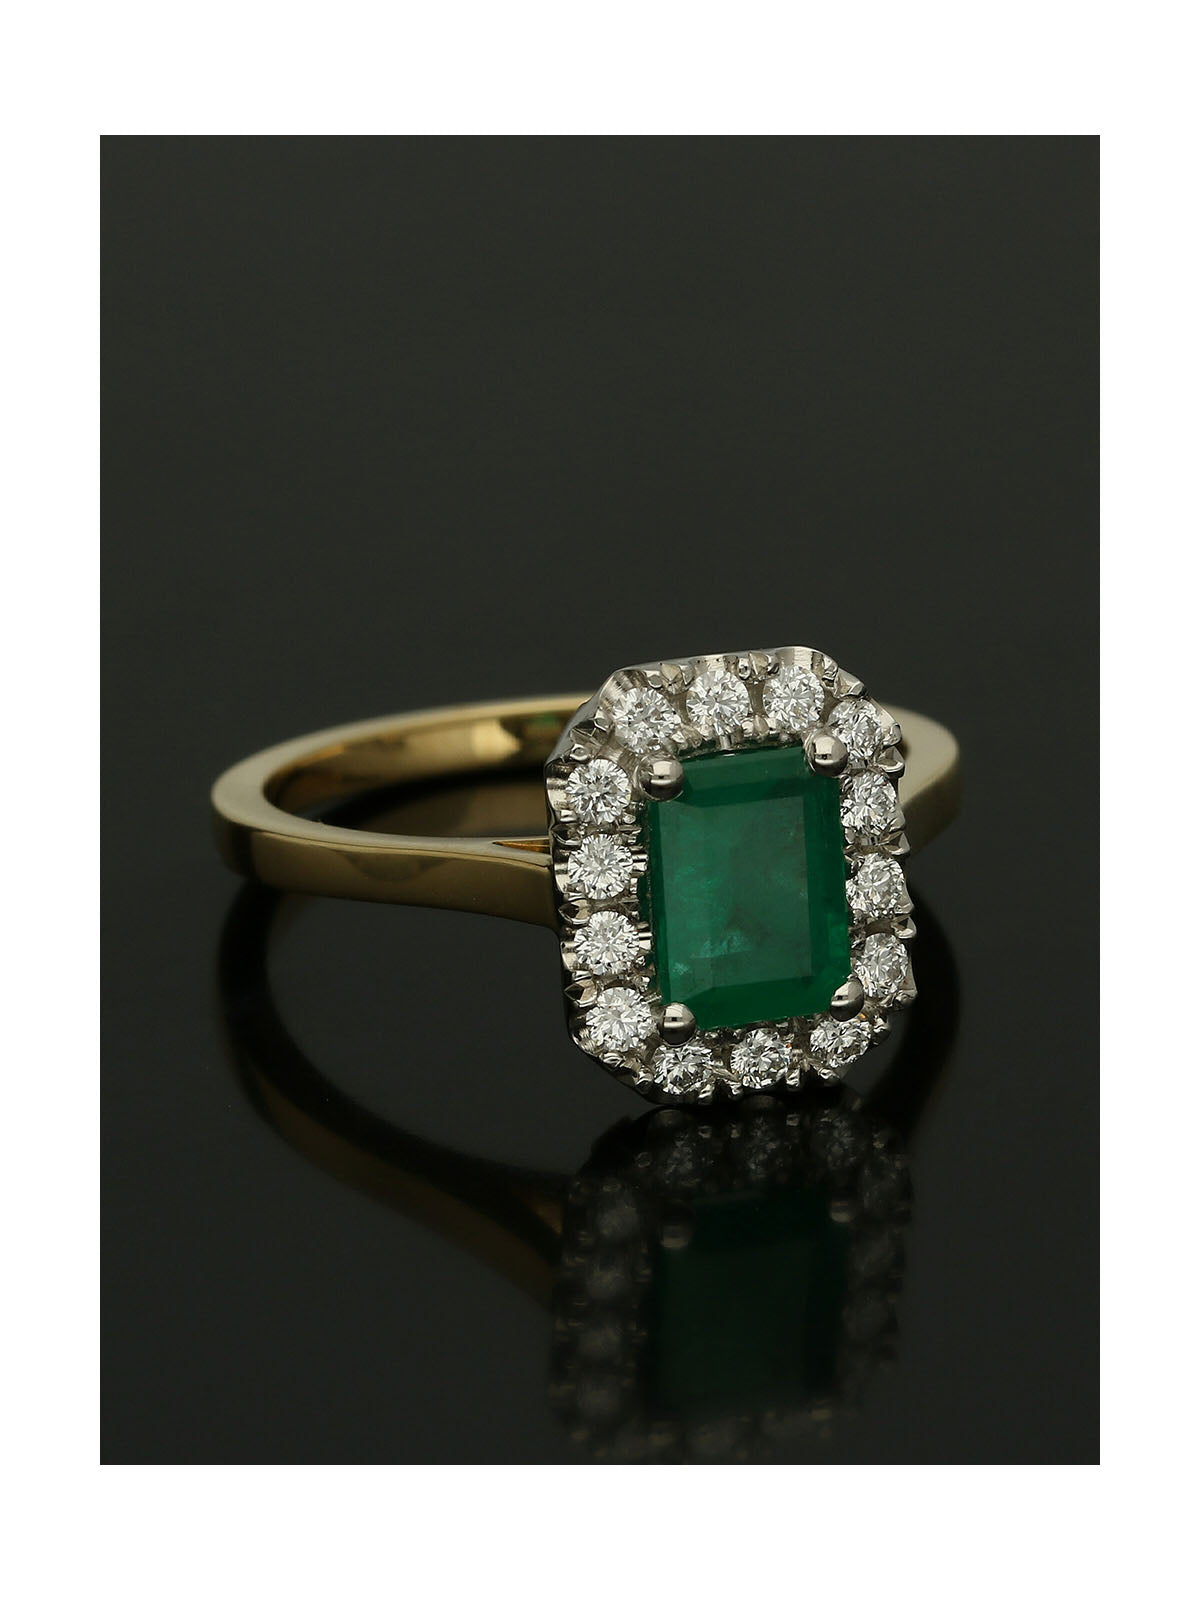 Emerald & Diamond Emerald Cut Halo Ring in 18ct Yellow & White Gold